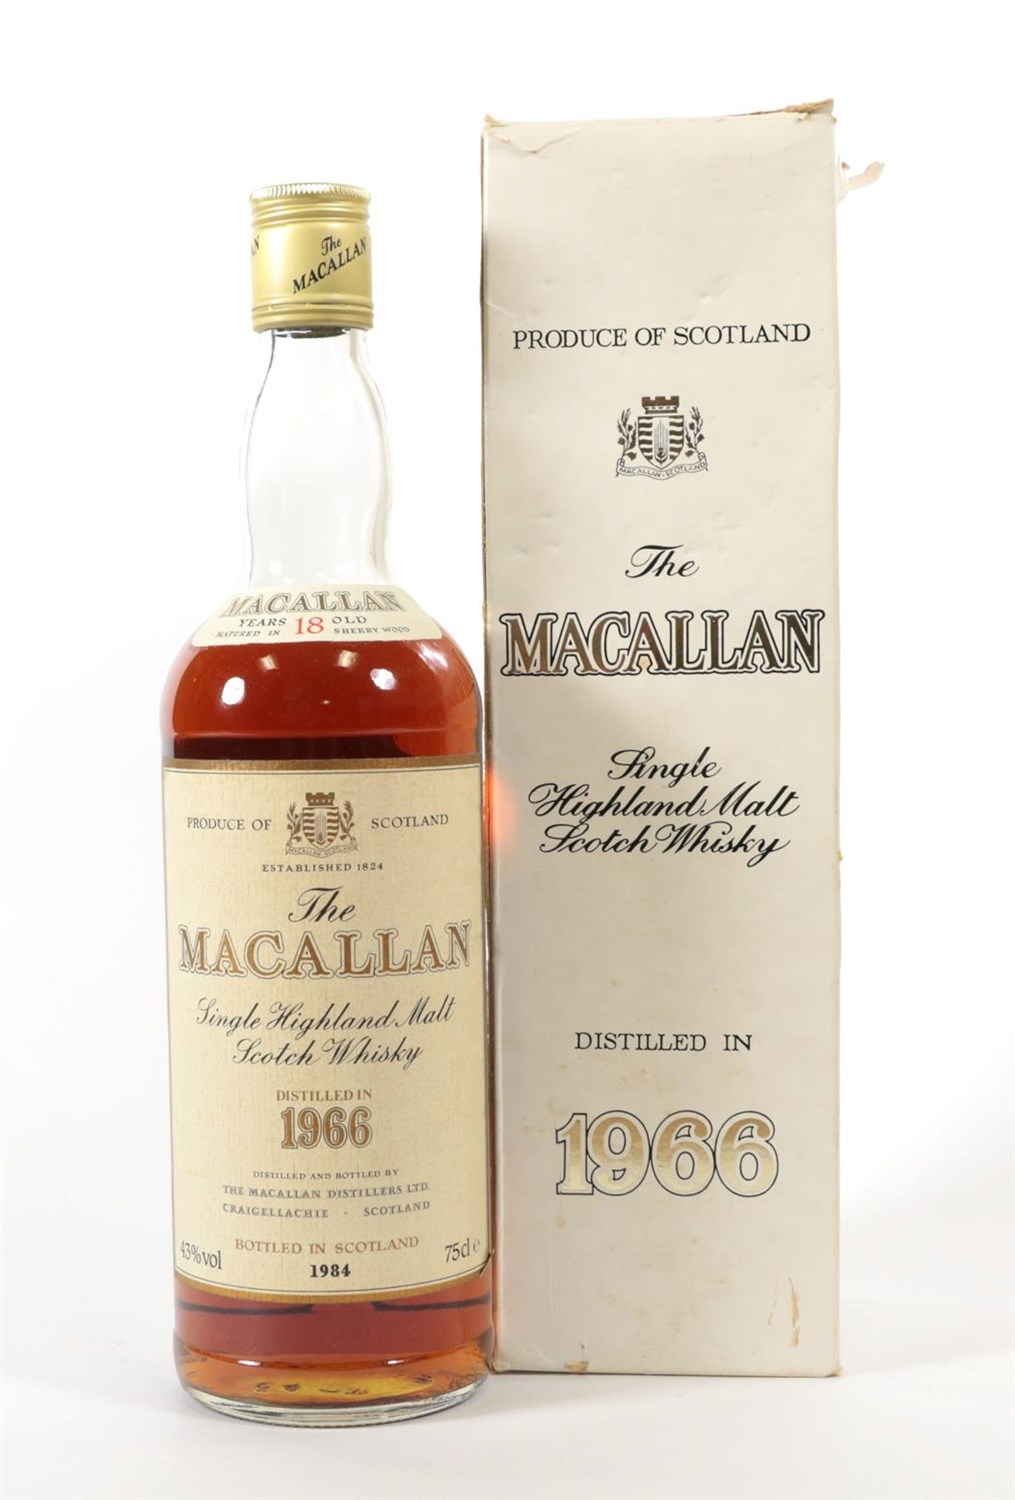 Lot 5124 The Macallan Single Highland Malt Scotch 7442